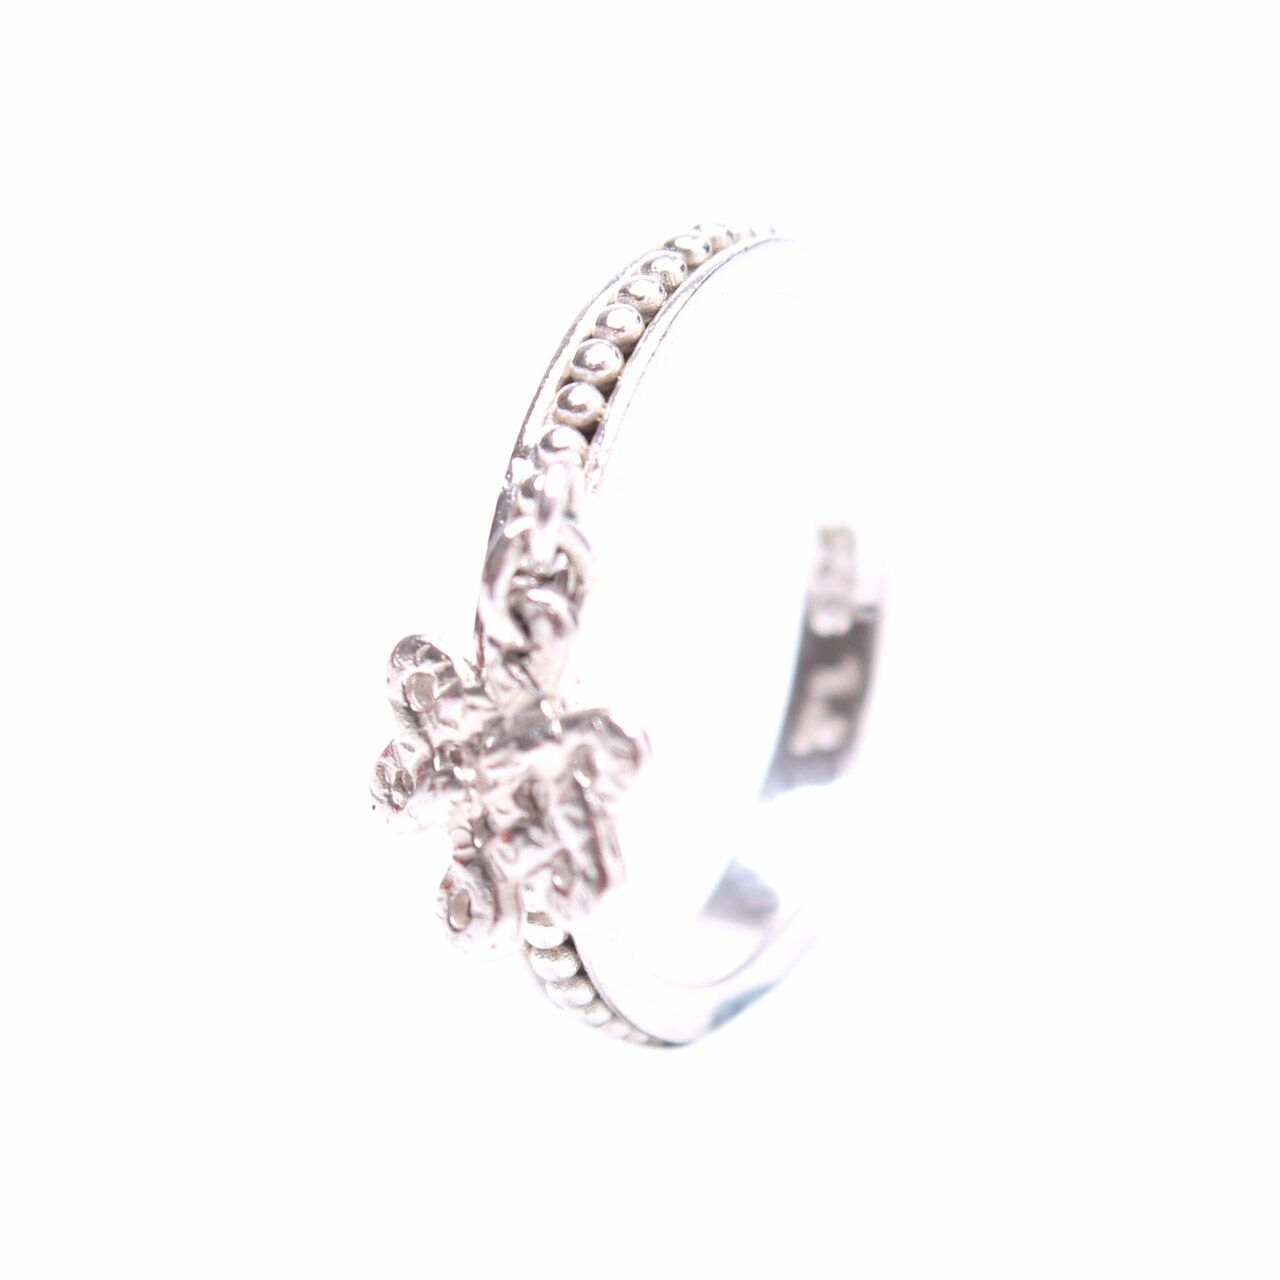 Tulola Jewelry Silver Rings Jewelry